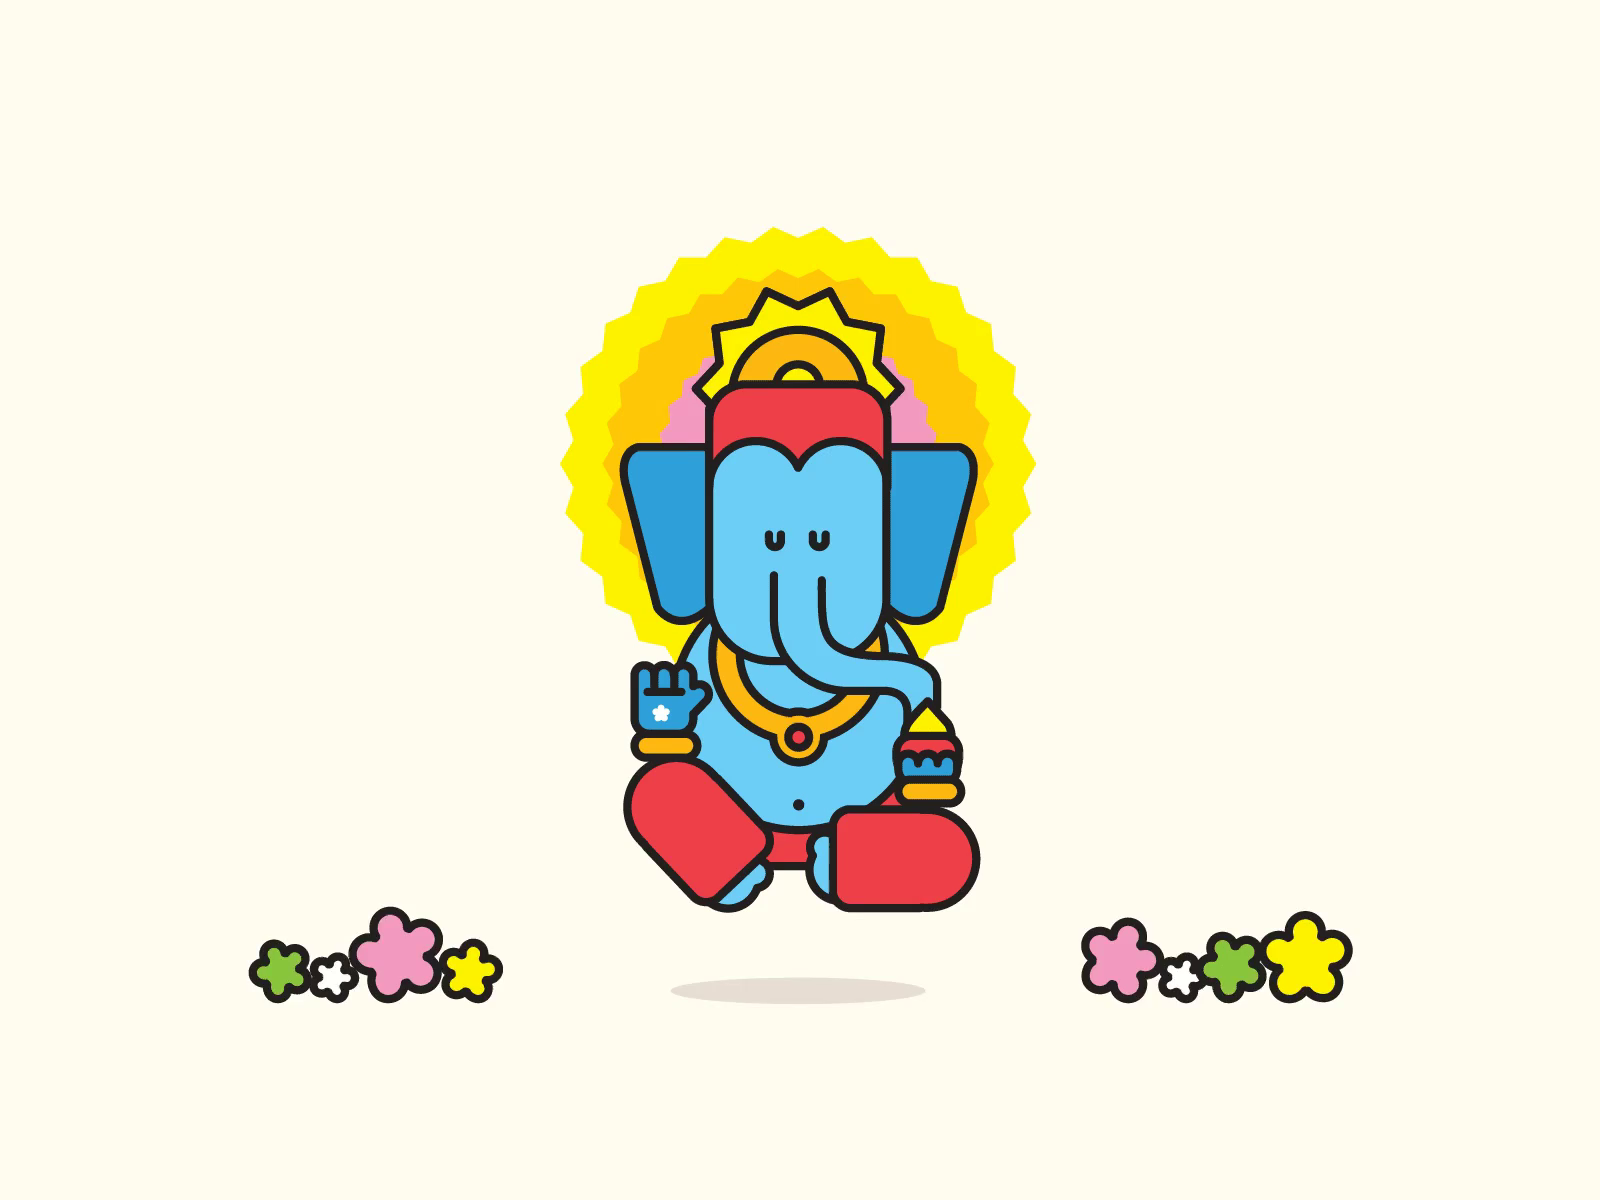 Ganesha Gif Invite by Pooja Jadav on Dribbble